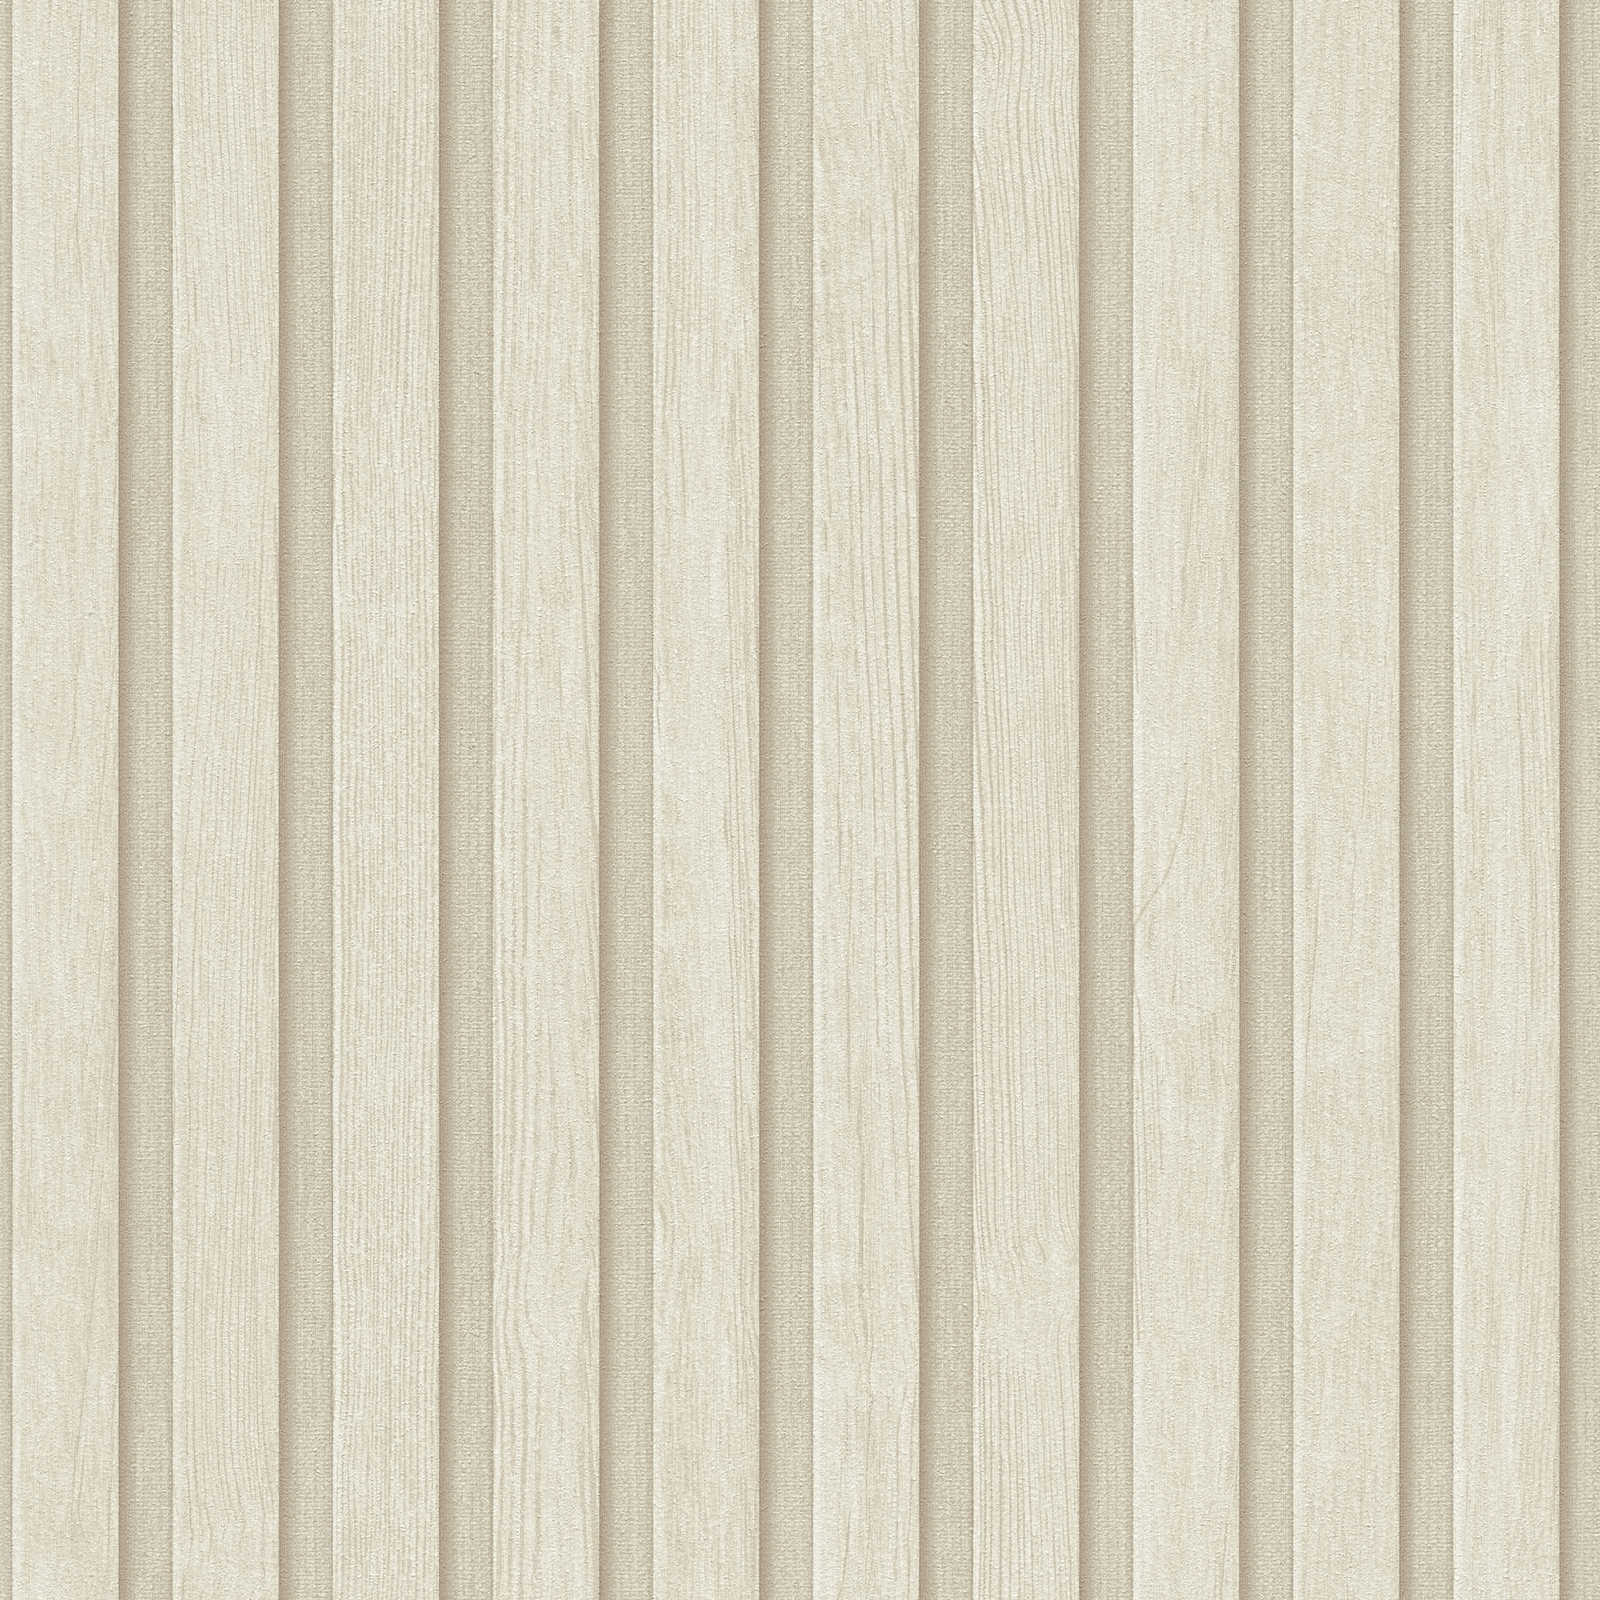 Rotolo da 5 mq di Carta da Parati LAMELLI LEGNO MILLERIGHE 3D effetto Boiserie CREAM - Eternal Parquet